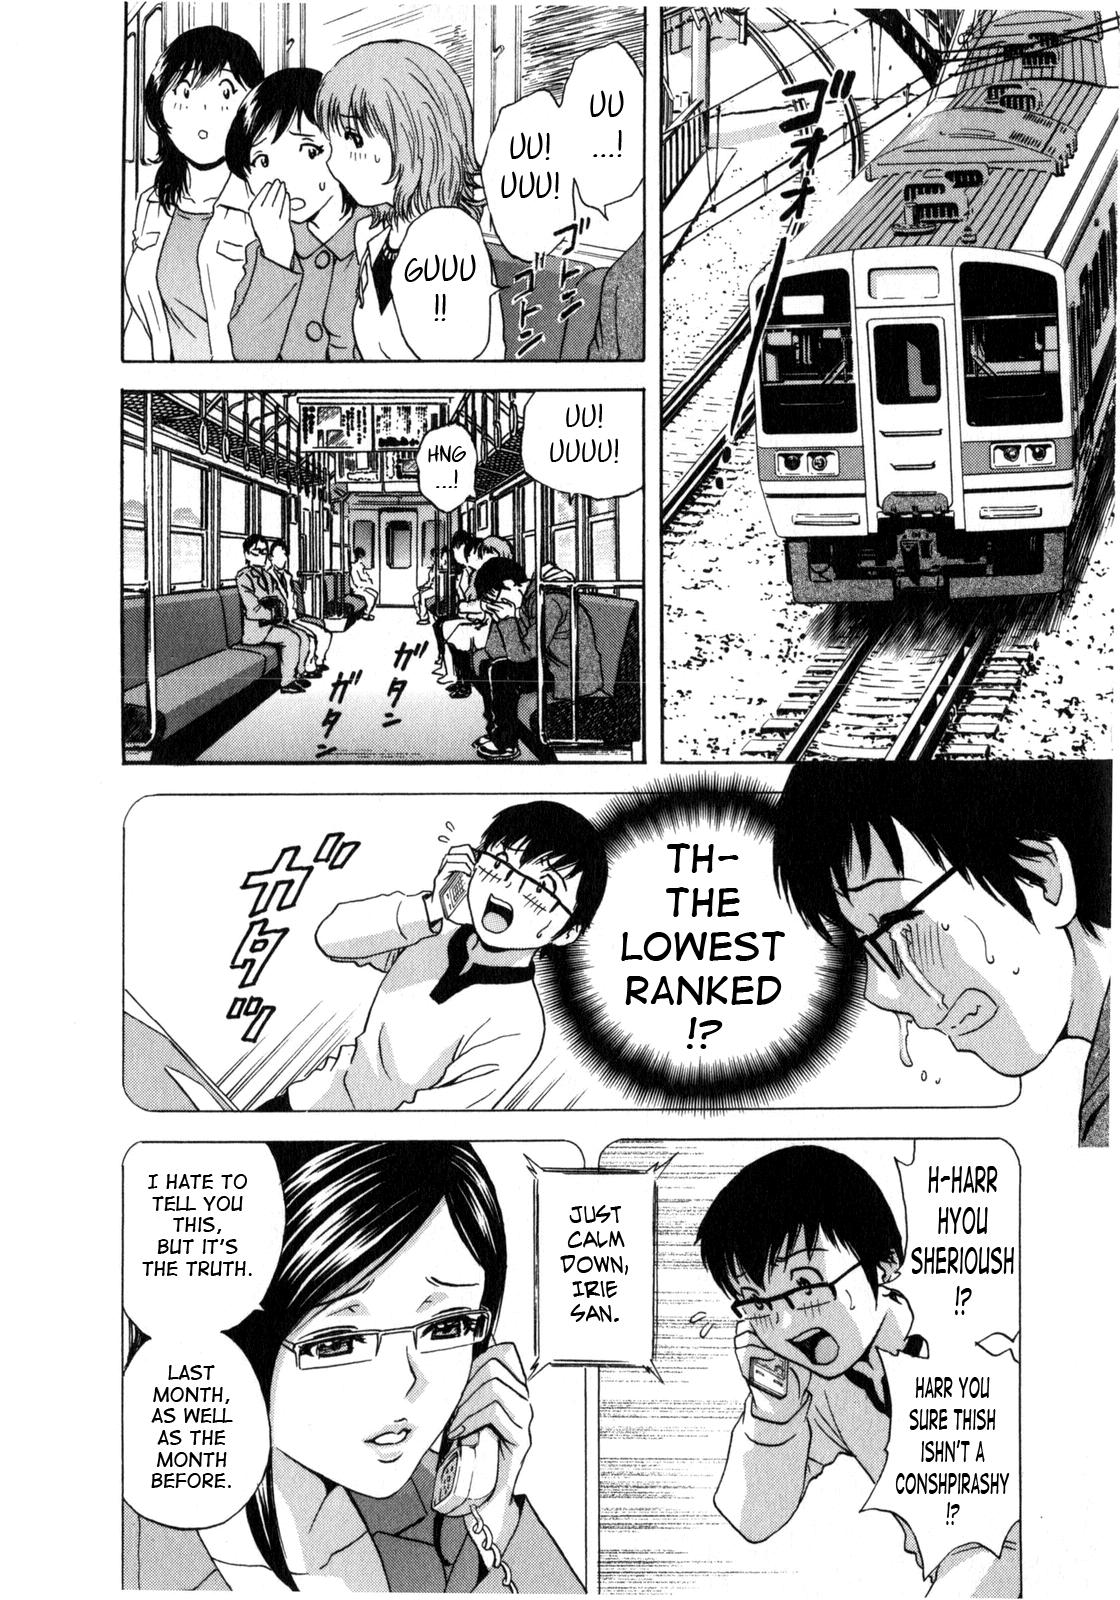 [Hidemaru] Life with Married Women Just Like a Manga 2 - Ch. 1-7 [English] {Tadanohito} 70